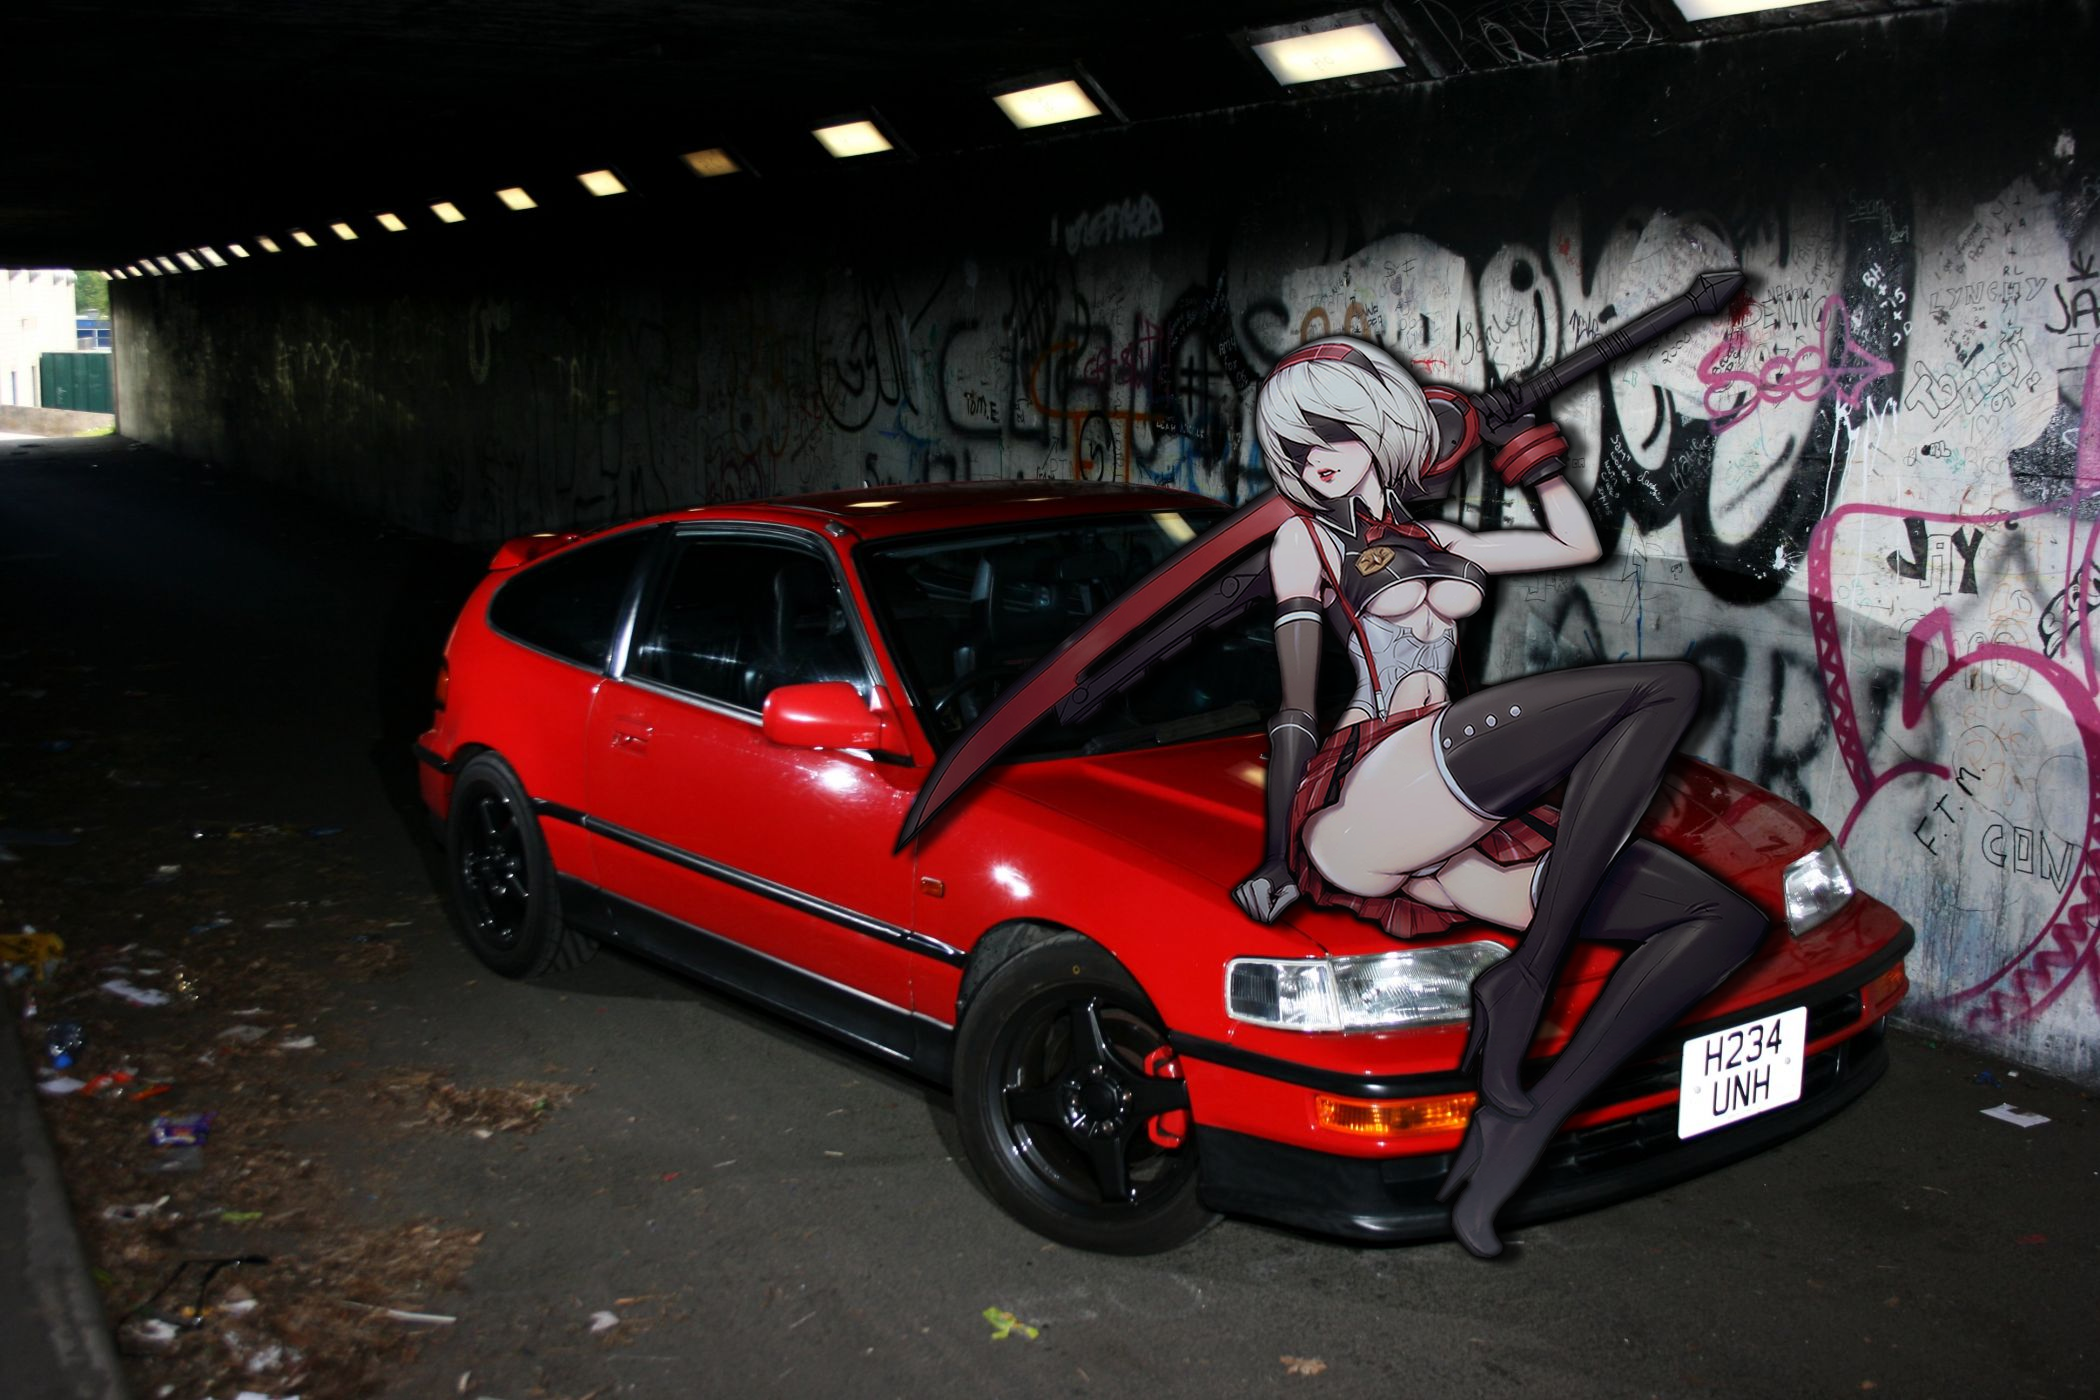 Anime 2100x1400 Nier: Automata Honda CRX Japanese cars anime girls panties underboob belly